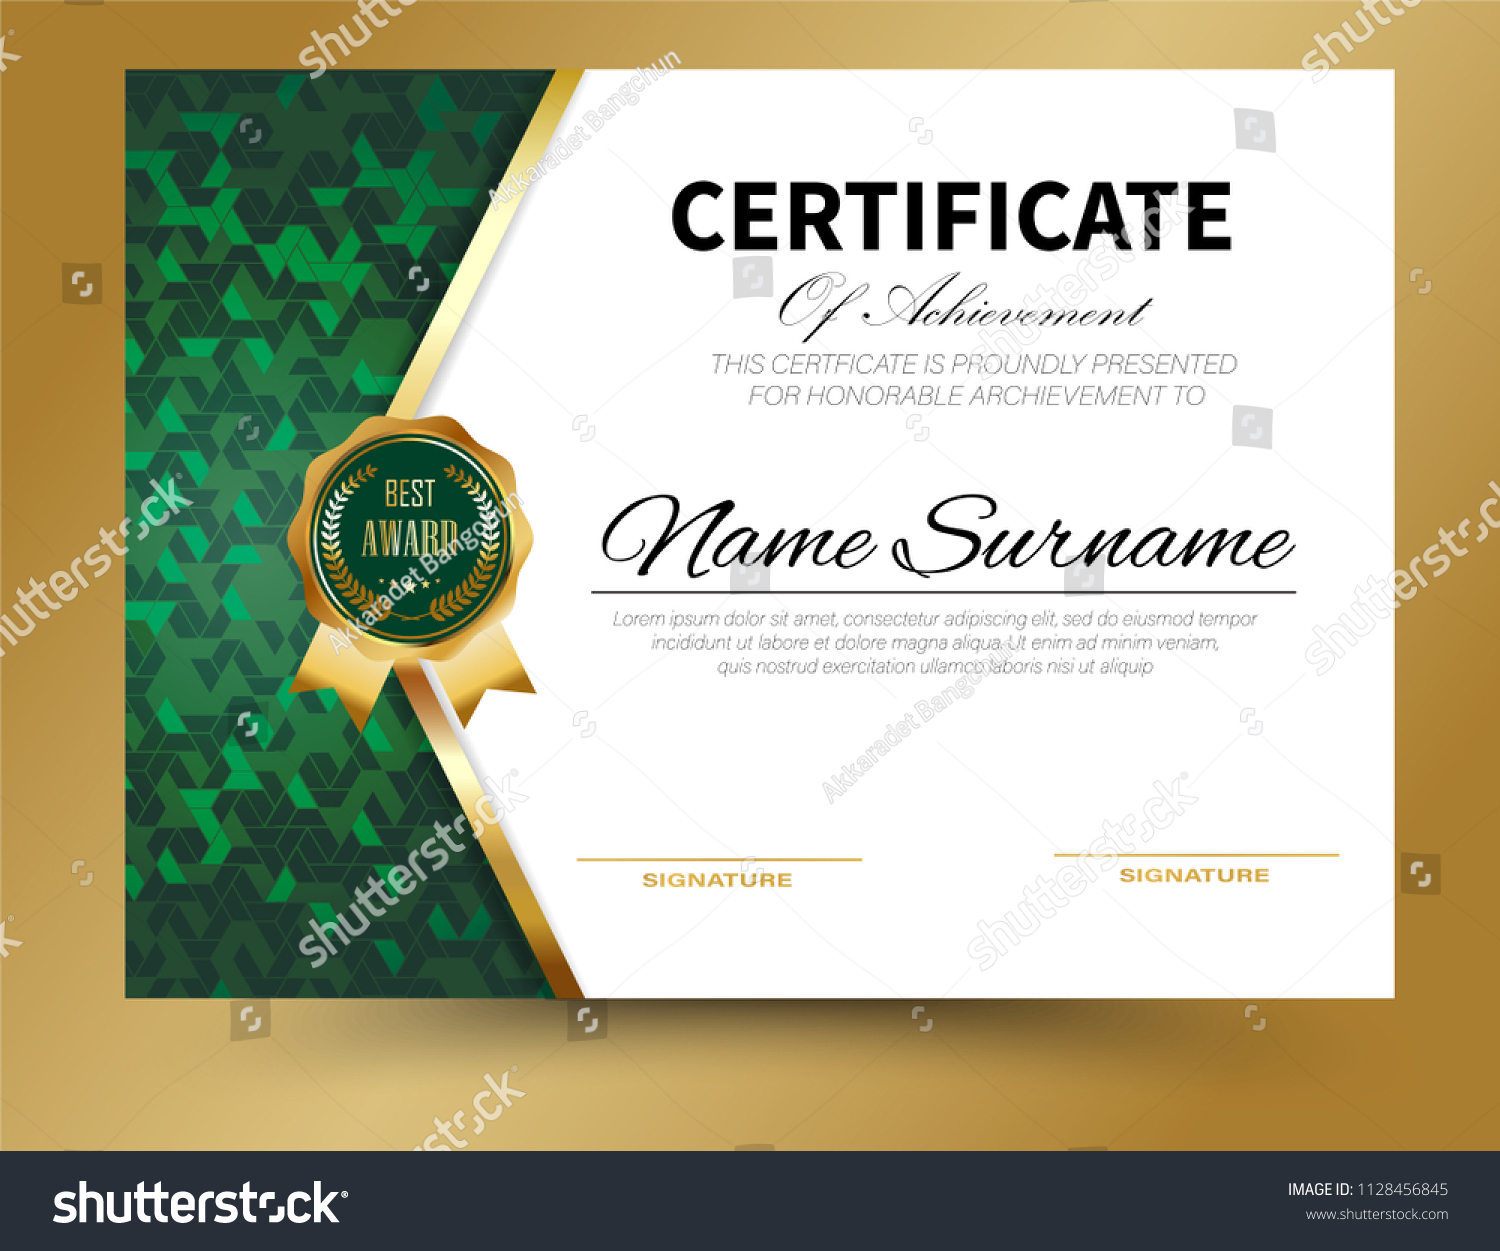 Certificate Template Design A21 Size Stock Vector (Royalty Free With Certificate Template Size